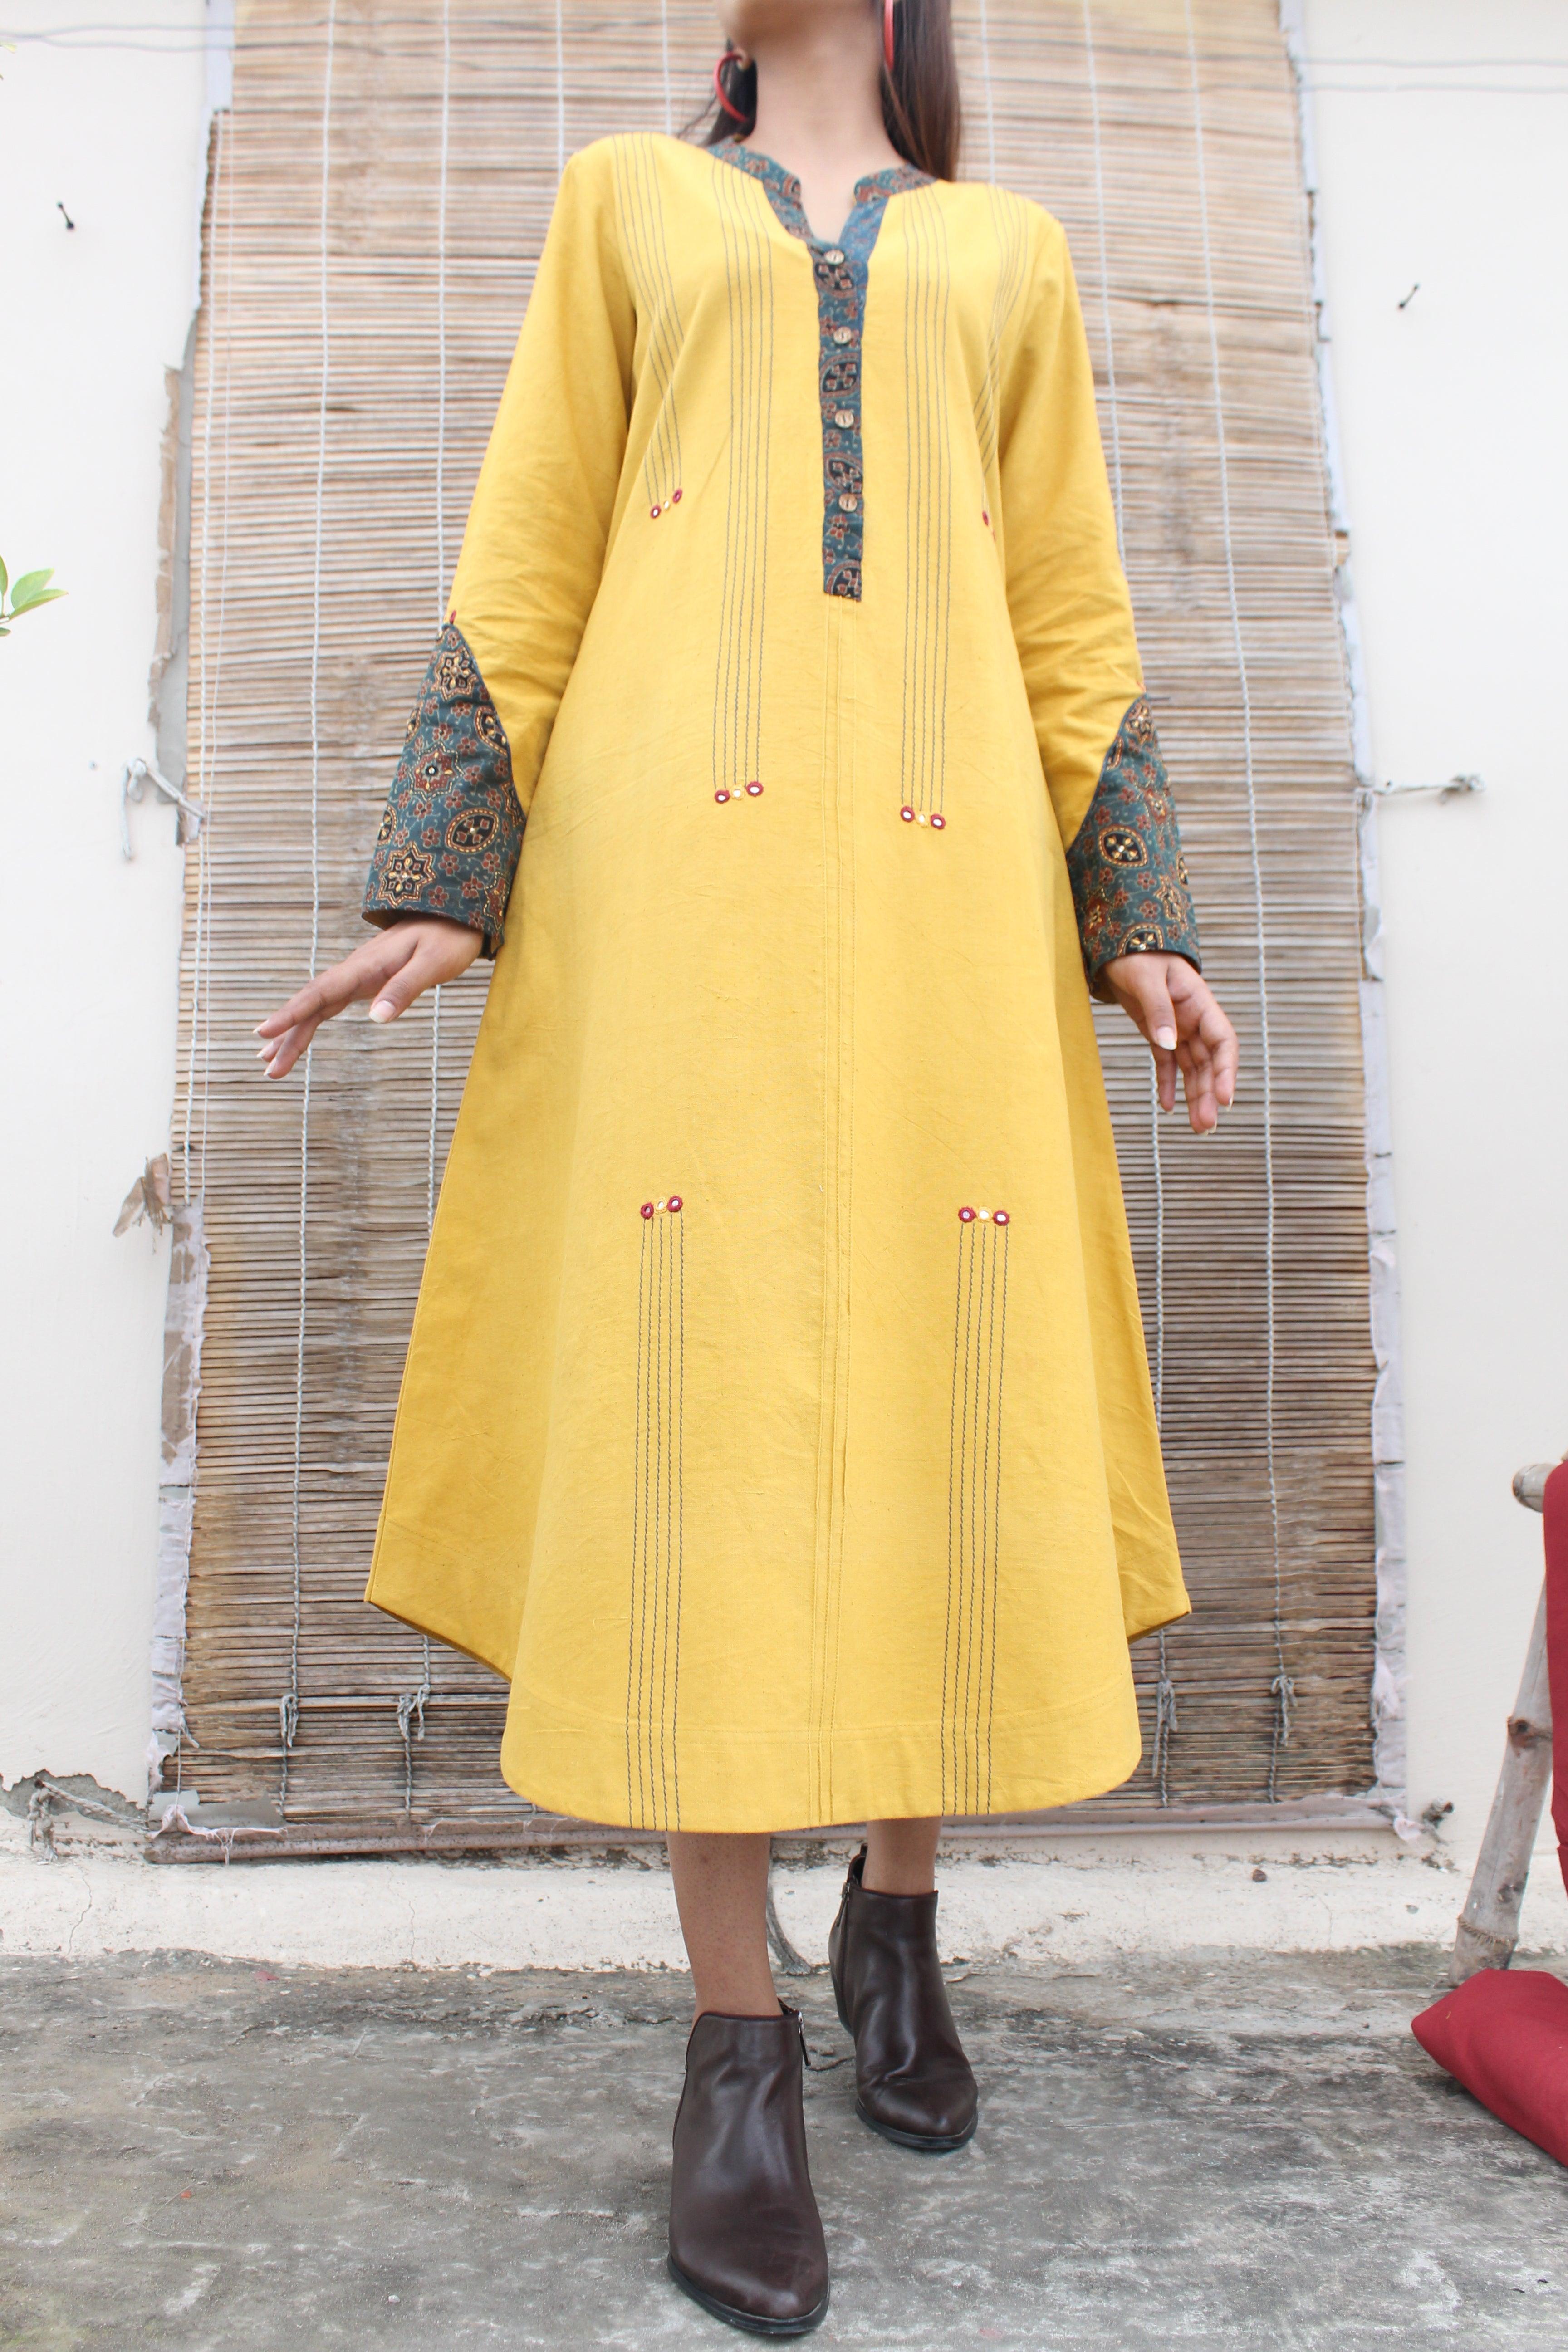 Khadi dress kurta with ajrakh and mirror detail - Sohni